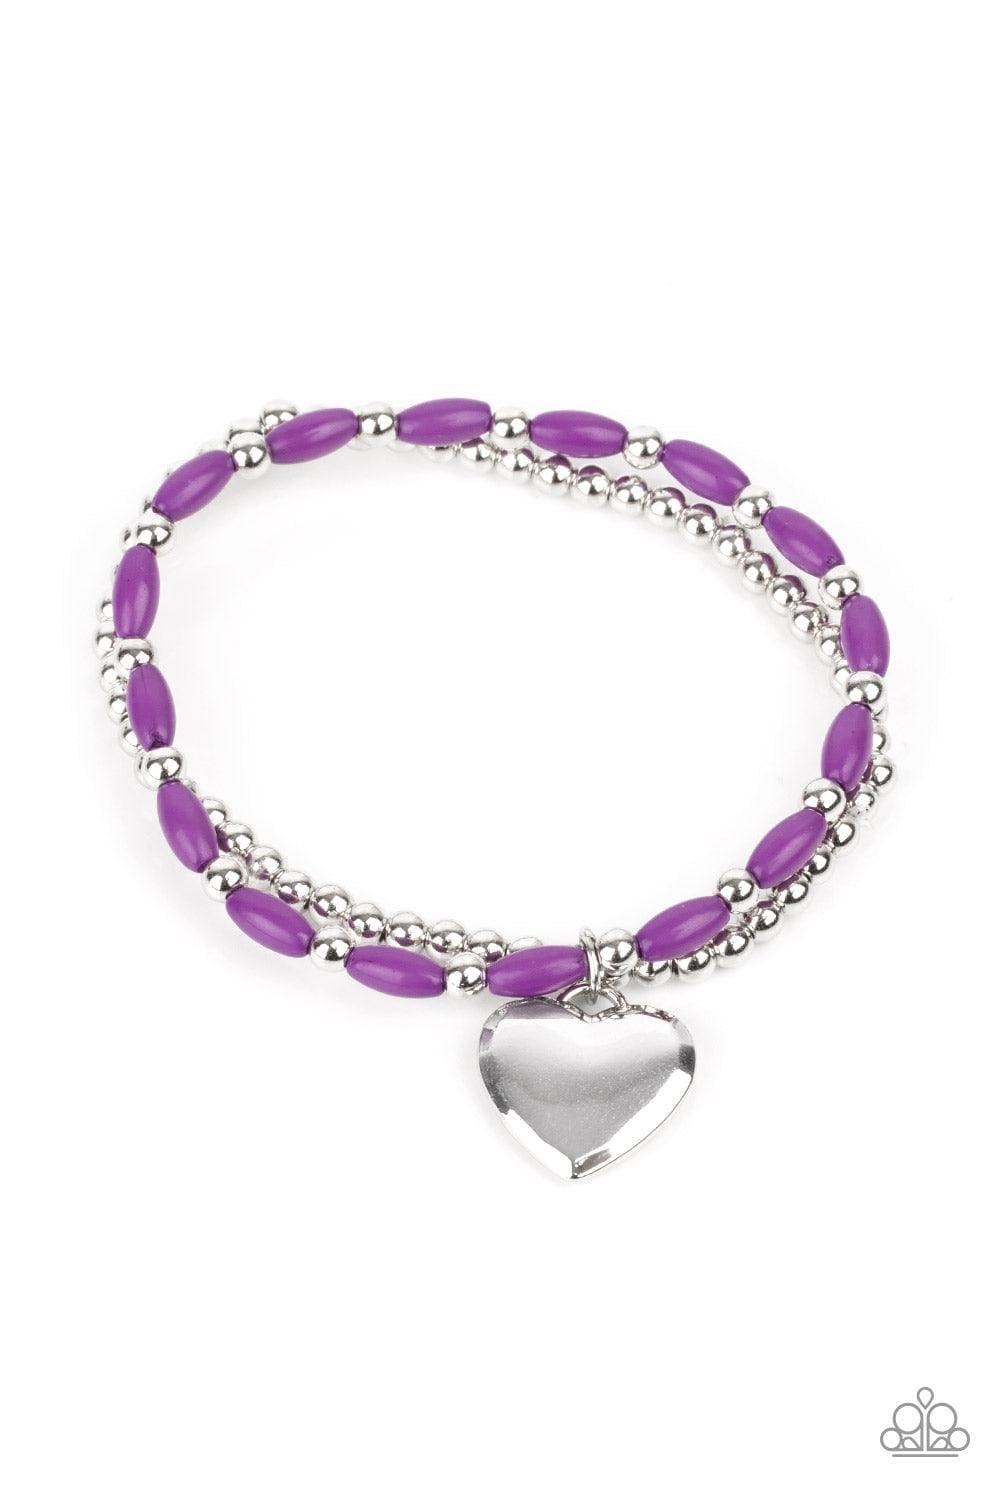 Paparazzi Accessories - Candy Gram - Purple Bracelet - Bling by JessieK